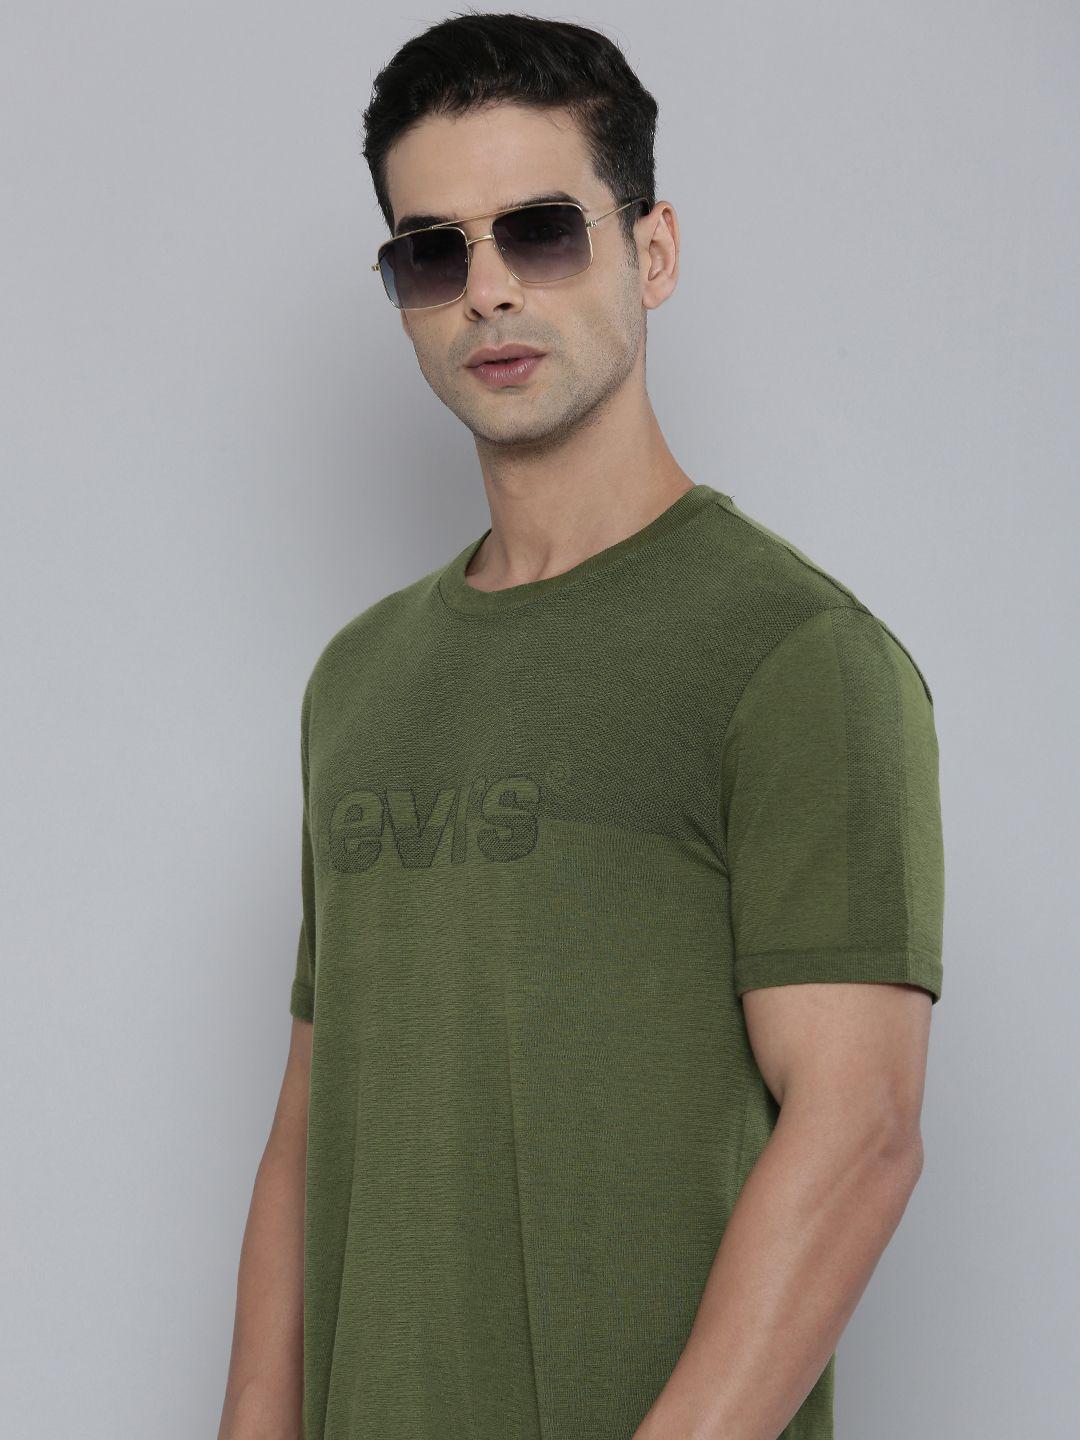 levis round neck colourblocked t-shirt